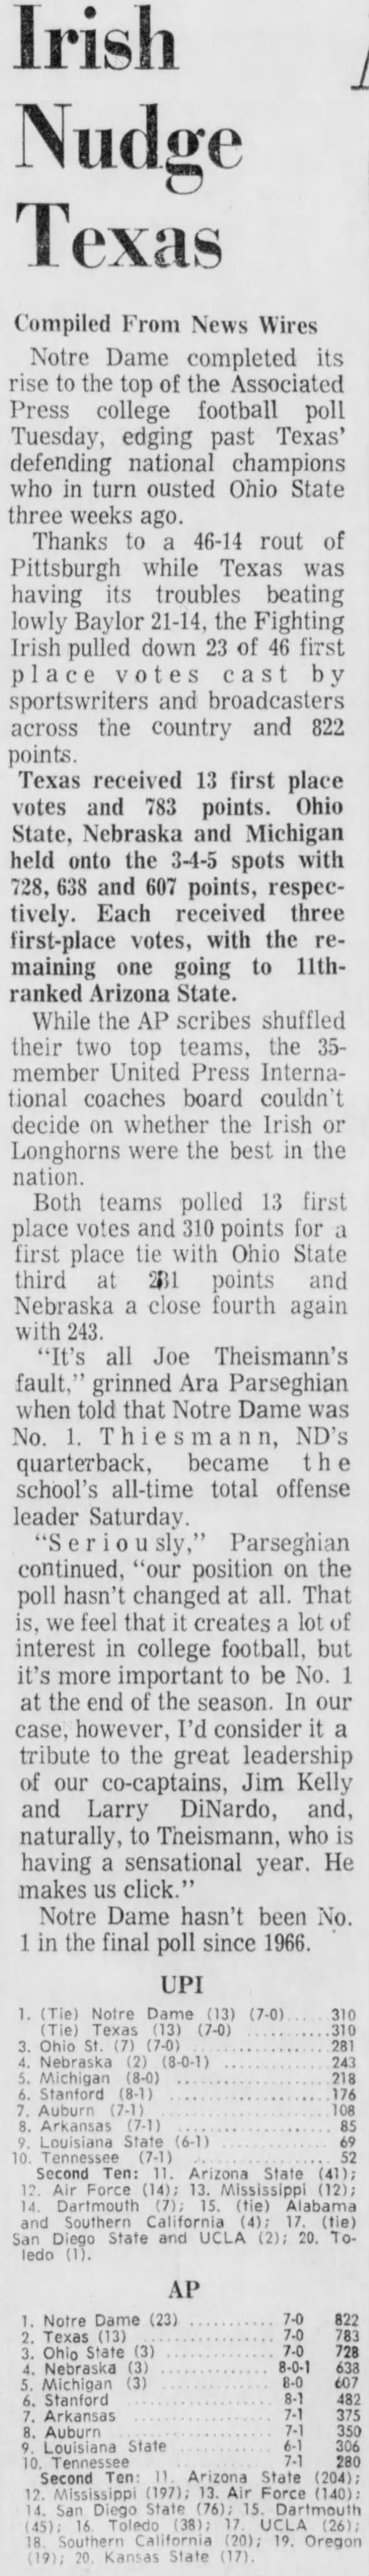 1970.11.10 College football polls